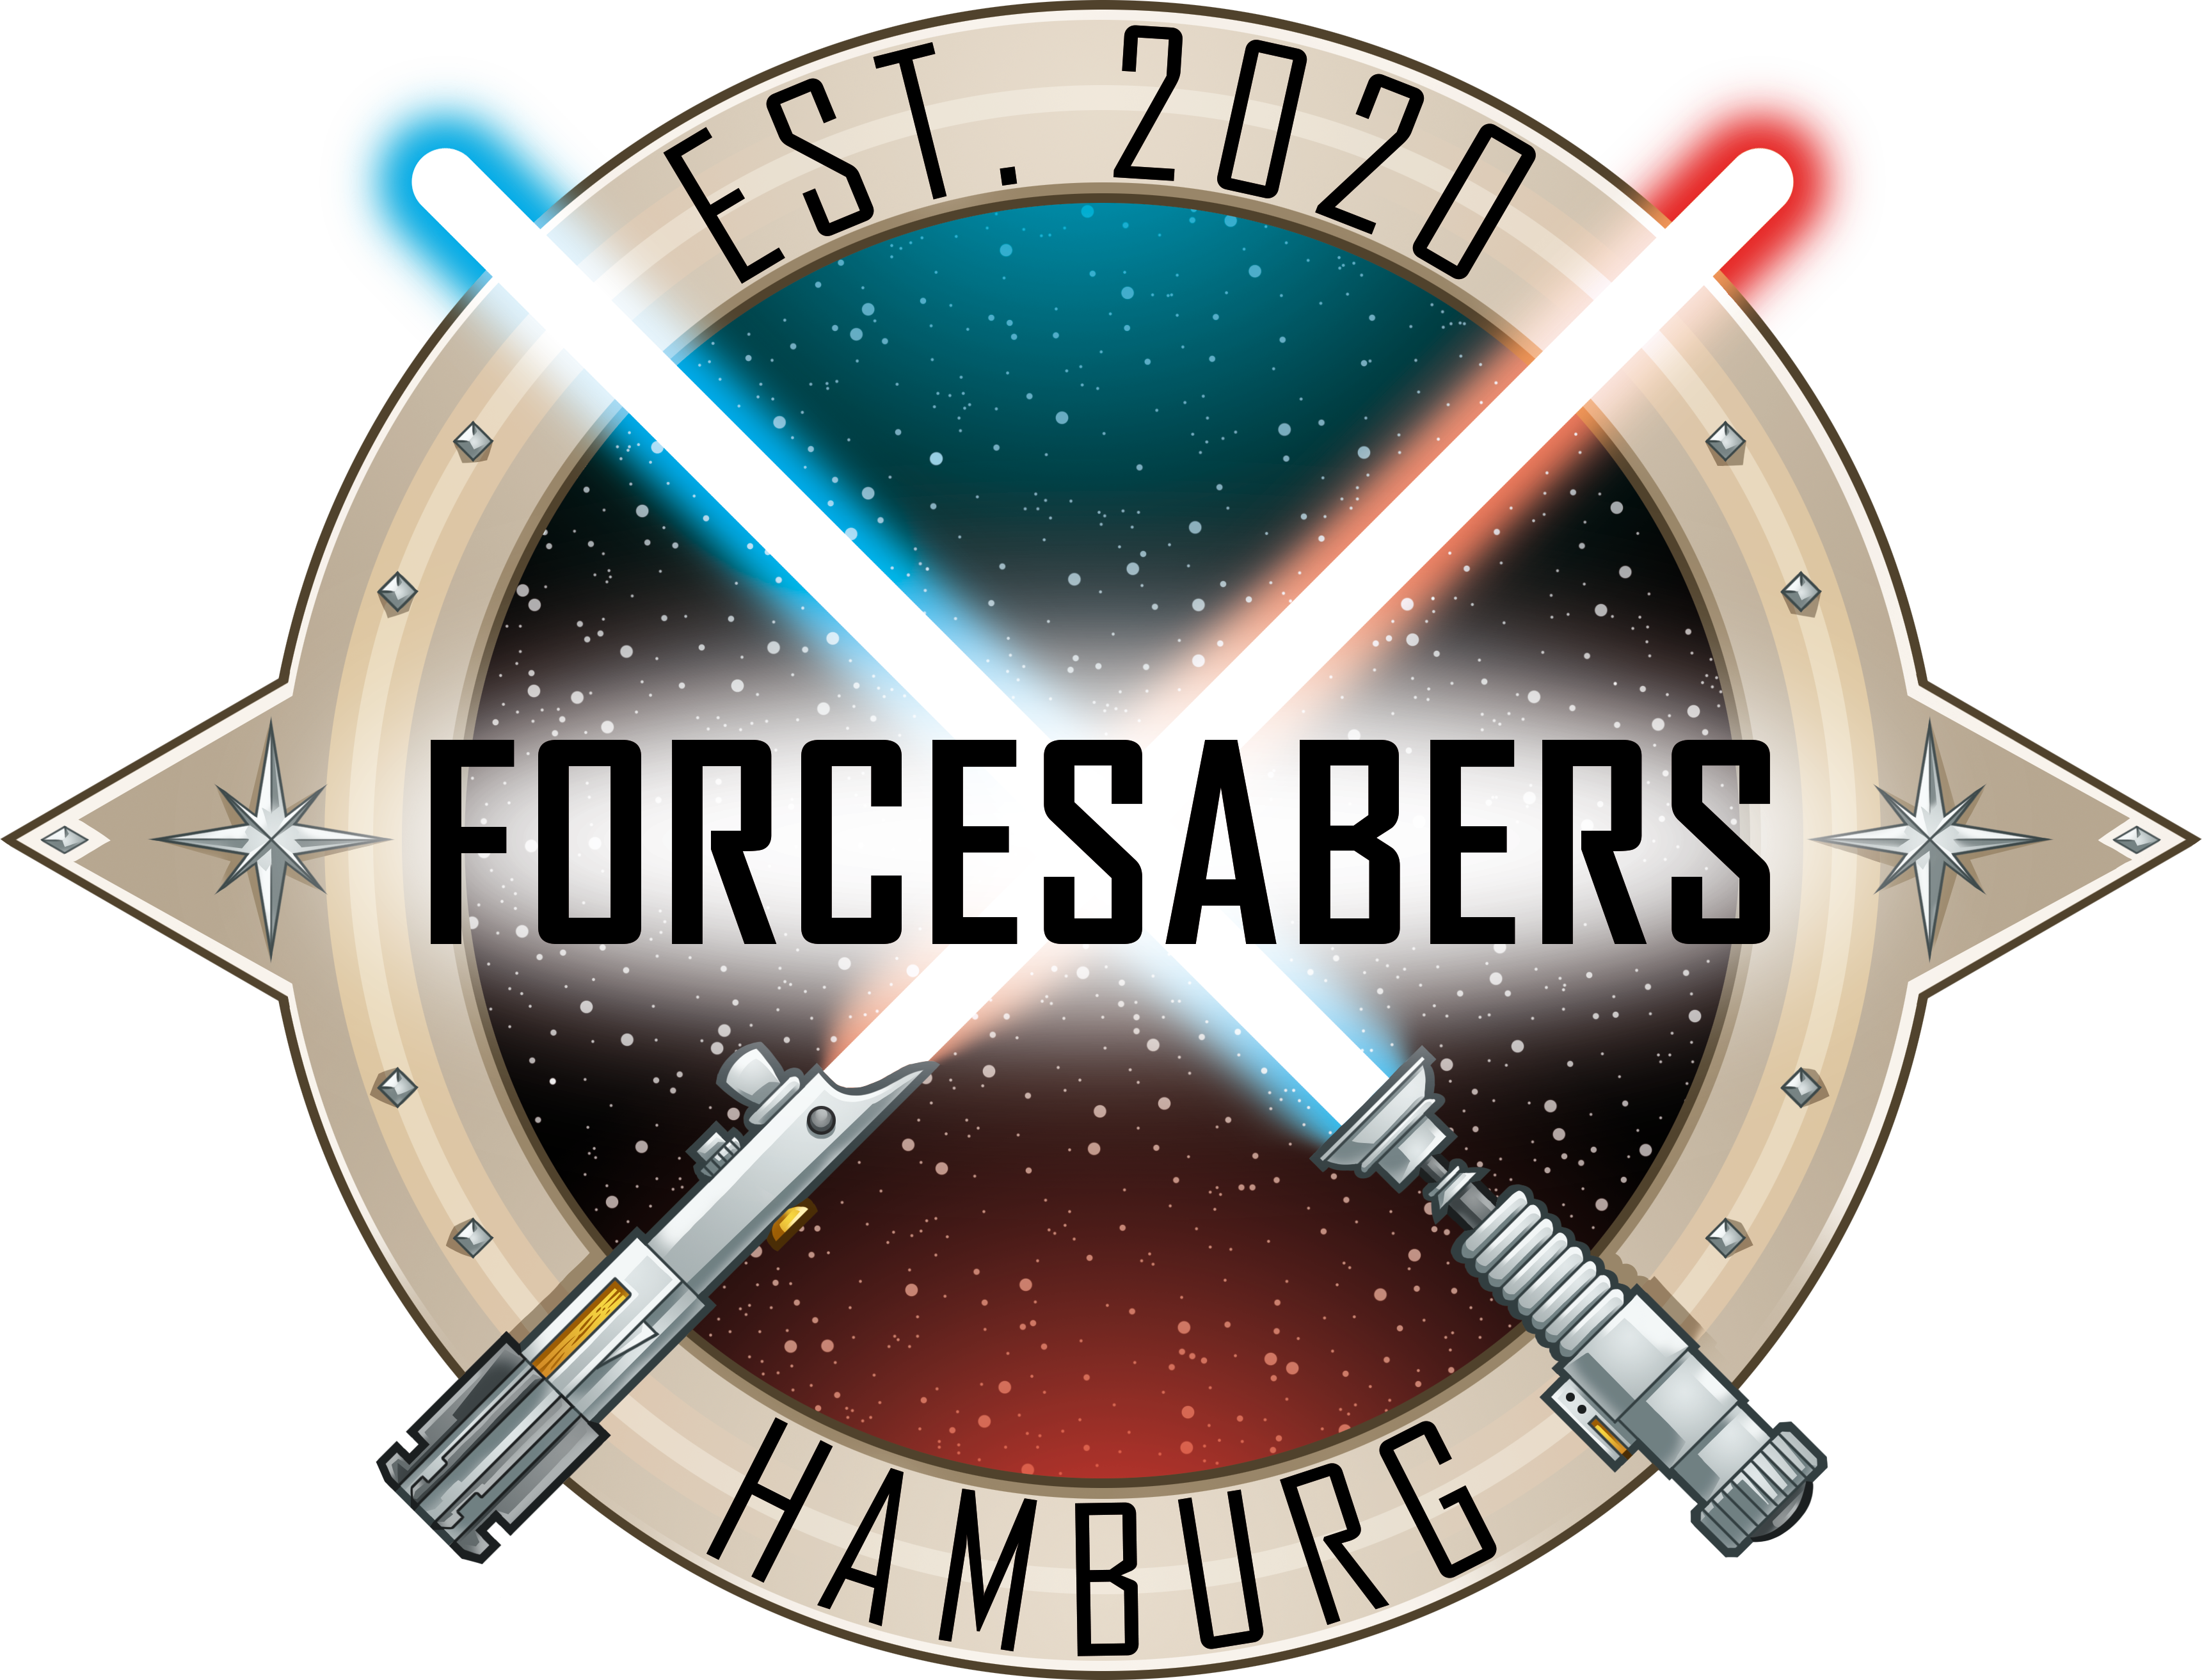 Forcesabers Hamburg